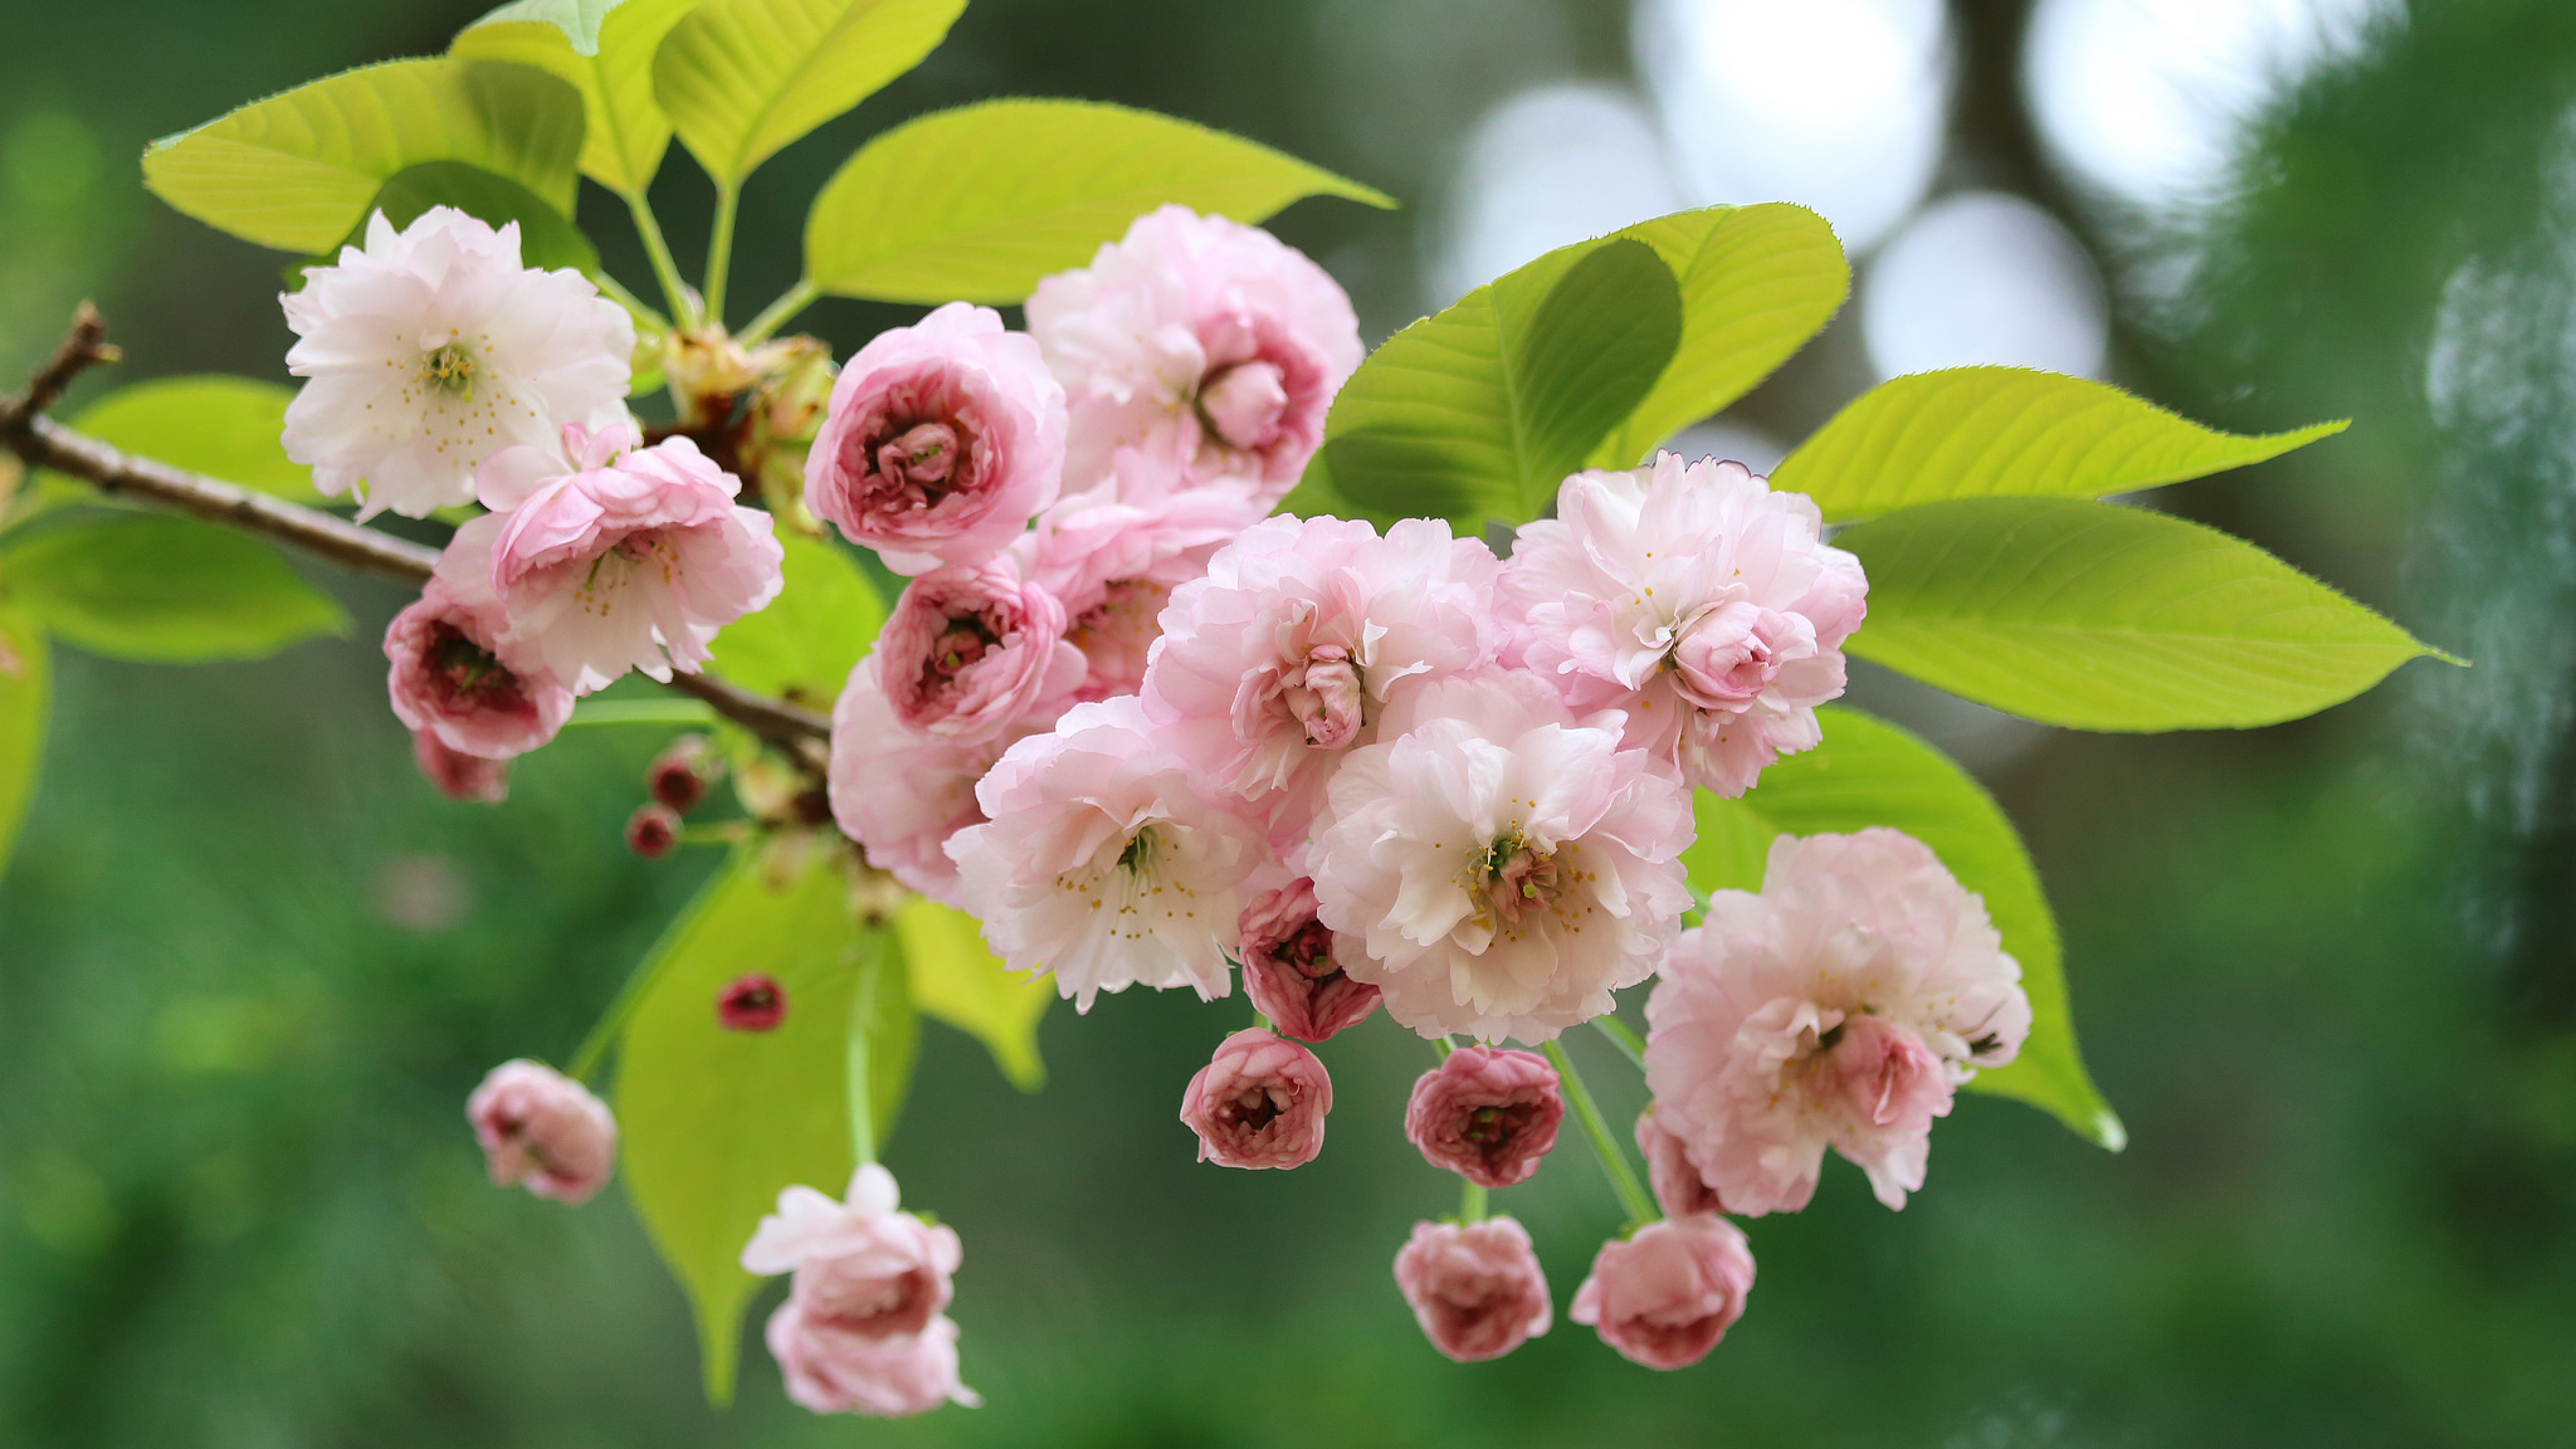 Цветы на ветке. Сакура яблоня. Махровая вишня. Вишня Сакура плоды. Цветок вишни мелкопильчатой Сакура.